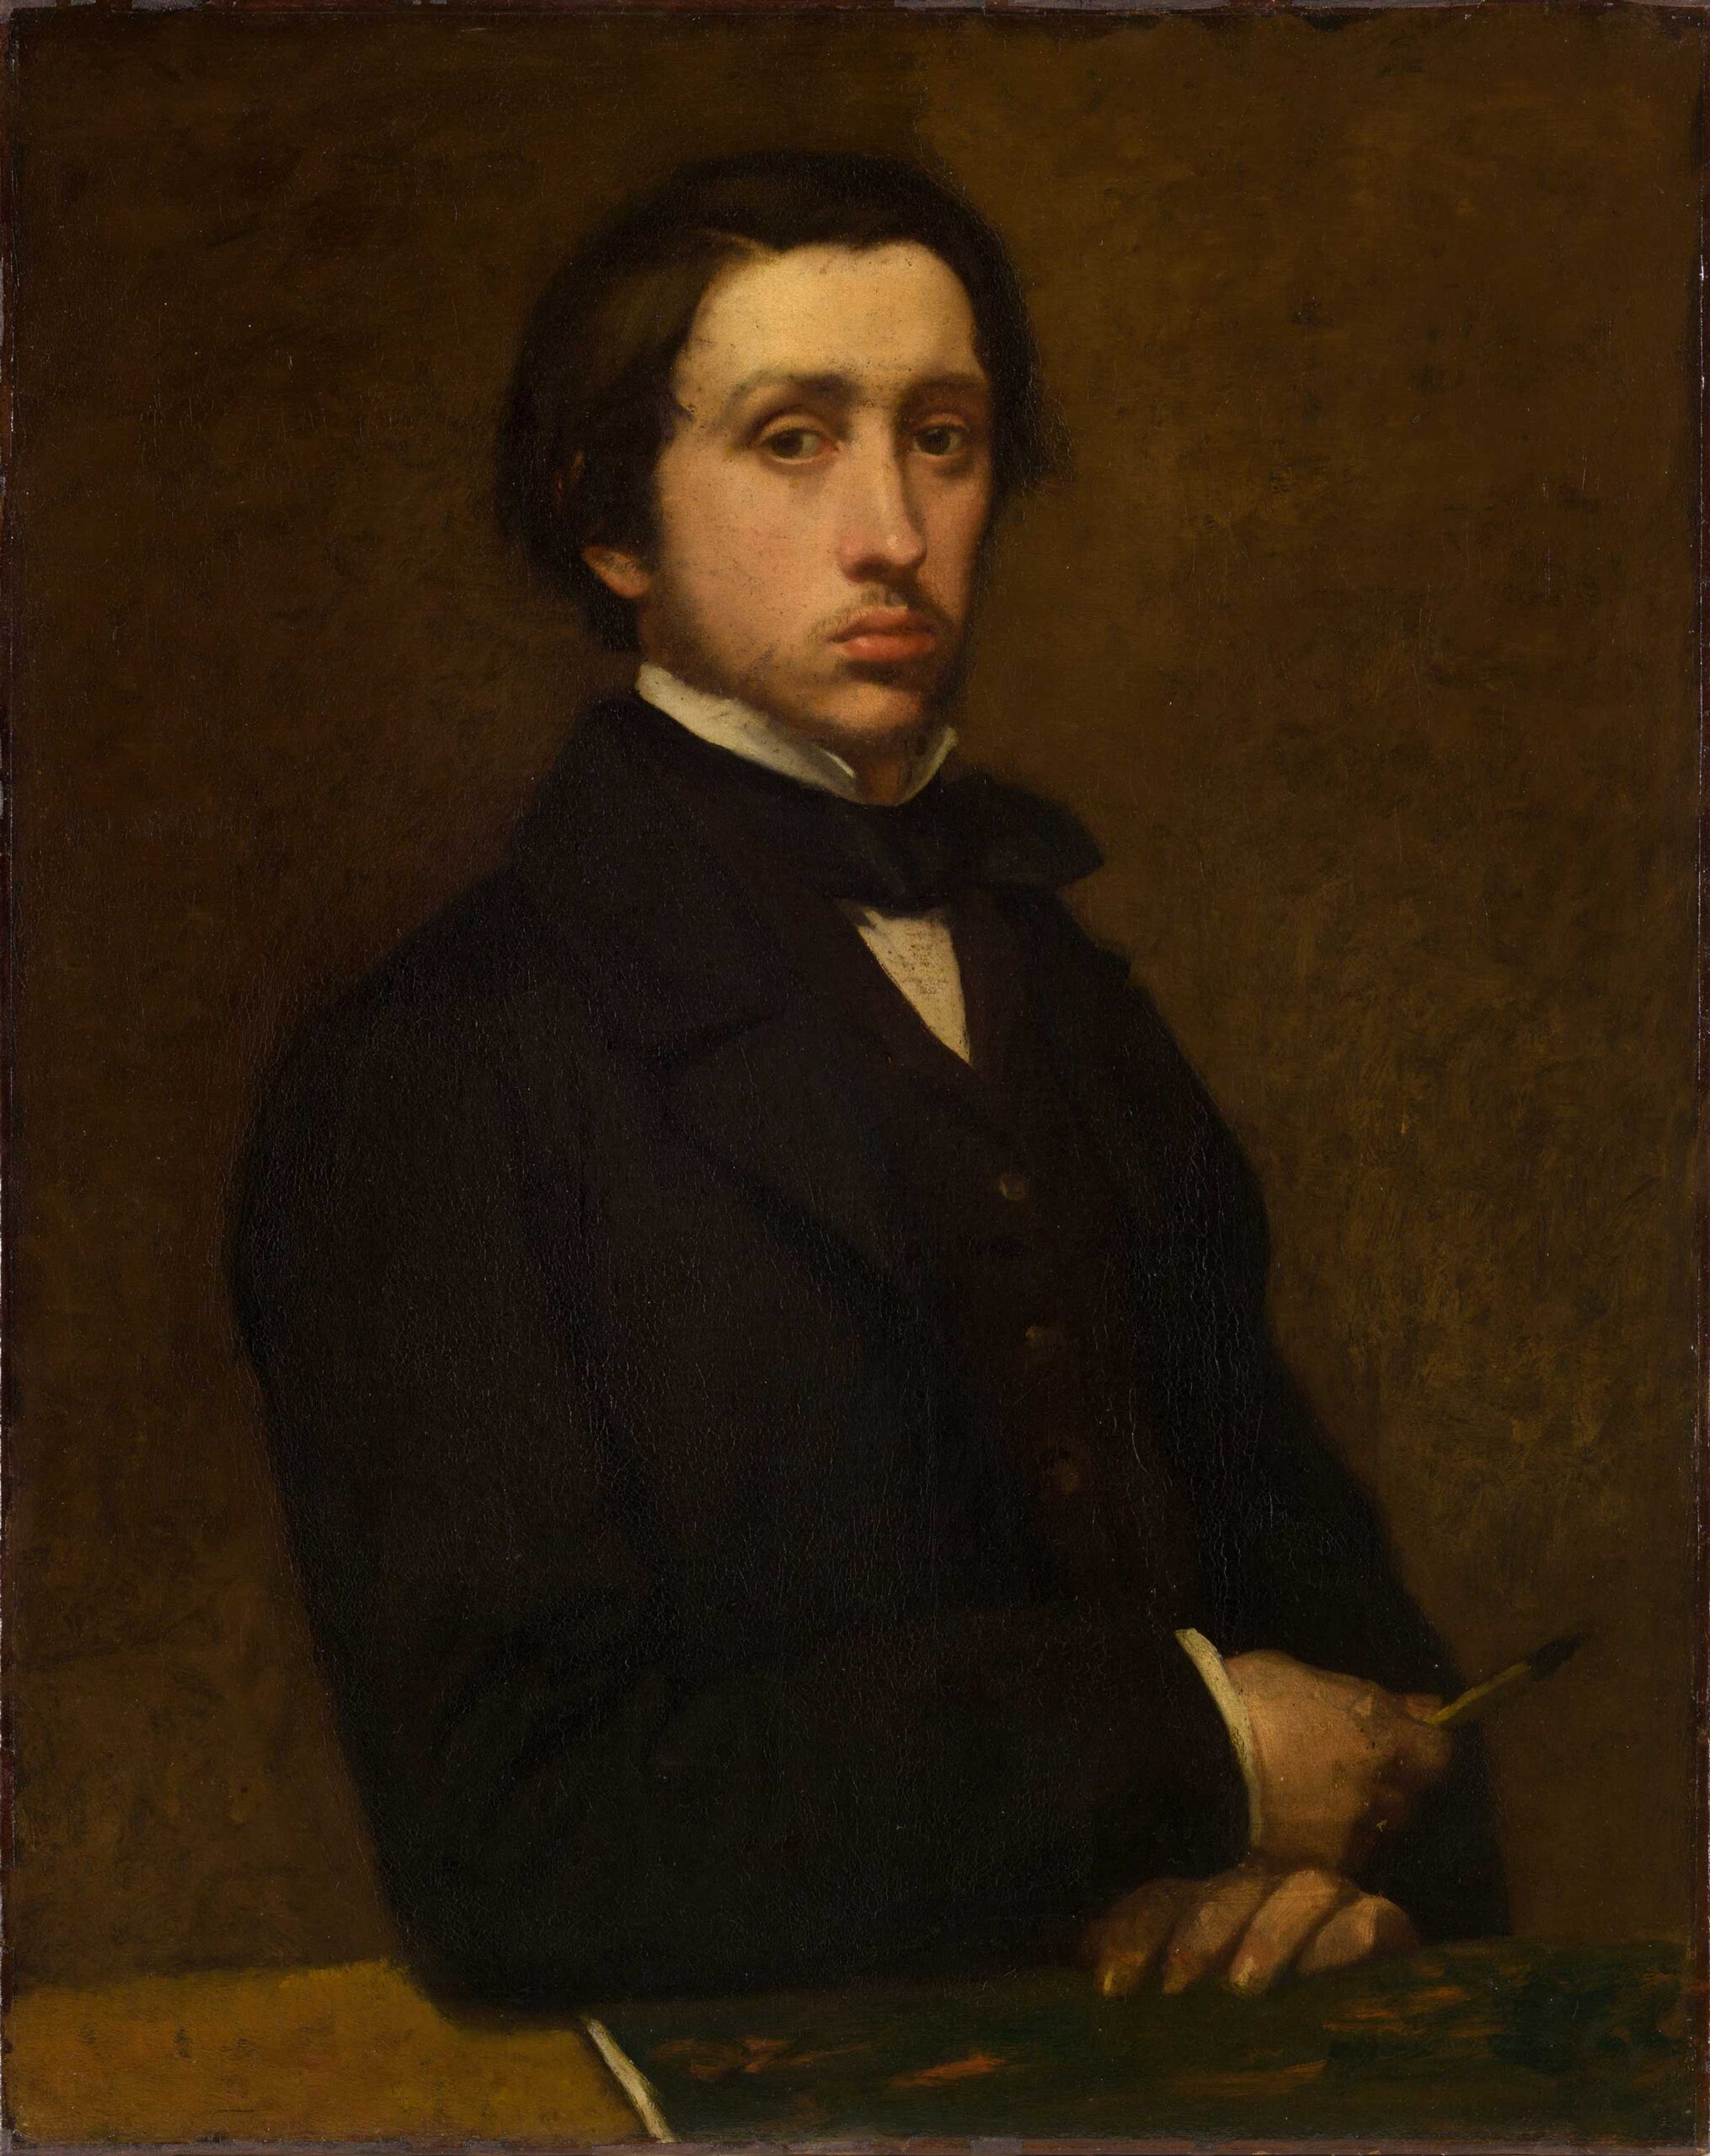 Degas self-portrait painting